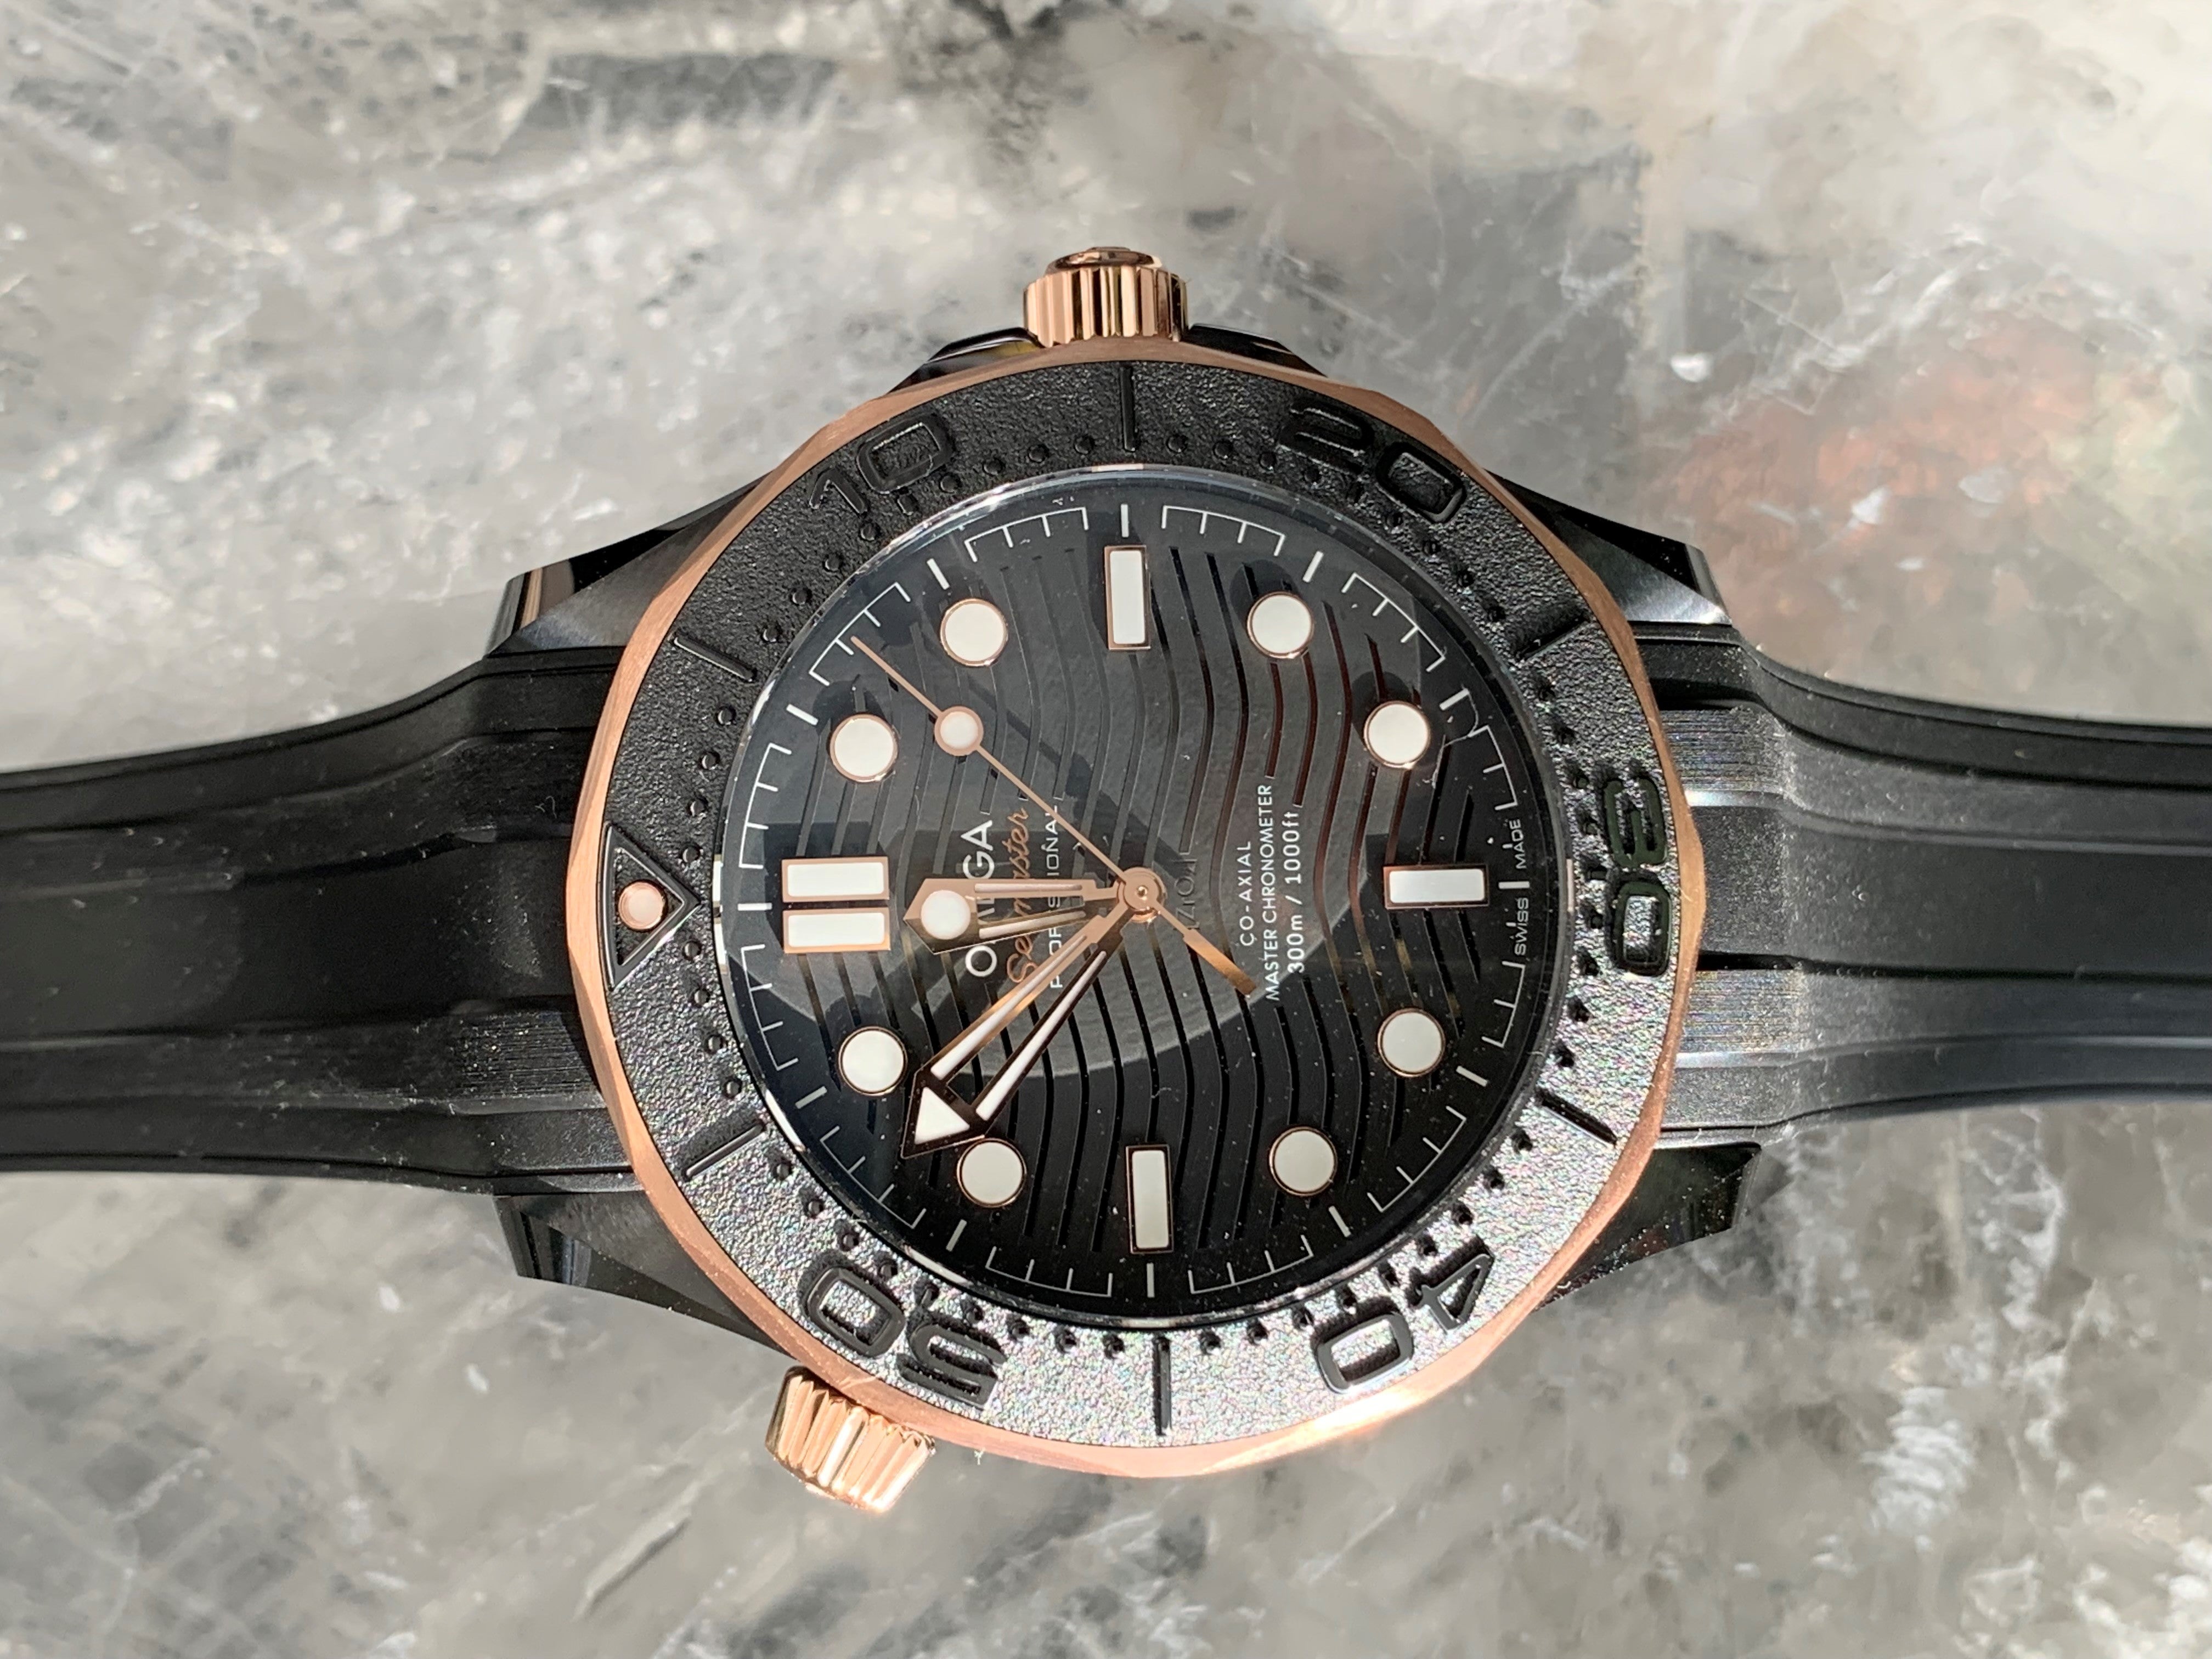 Omega Seamaster Diver 300m Chronometer 43.5mm Watch | Harley's Time LLC